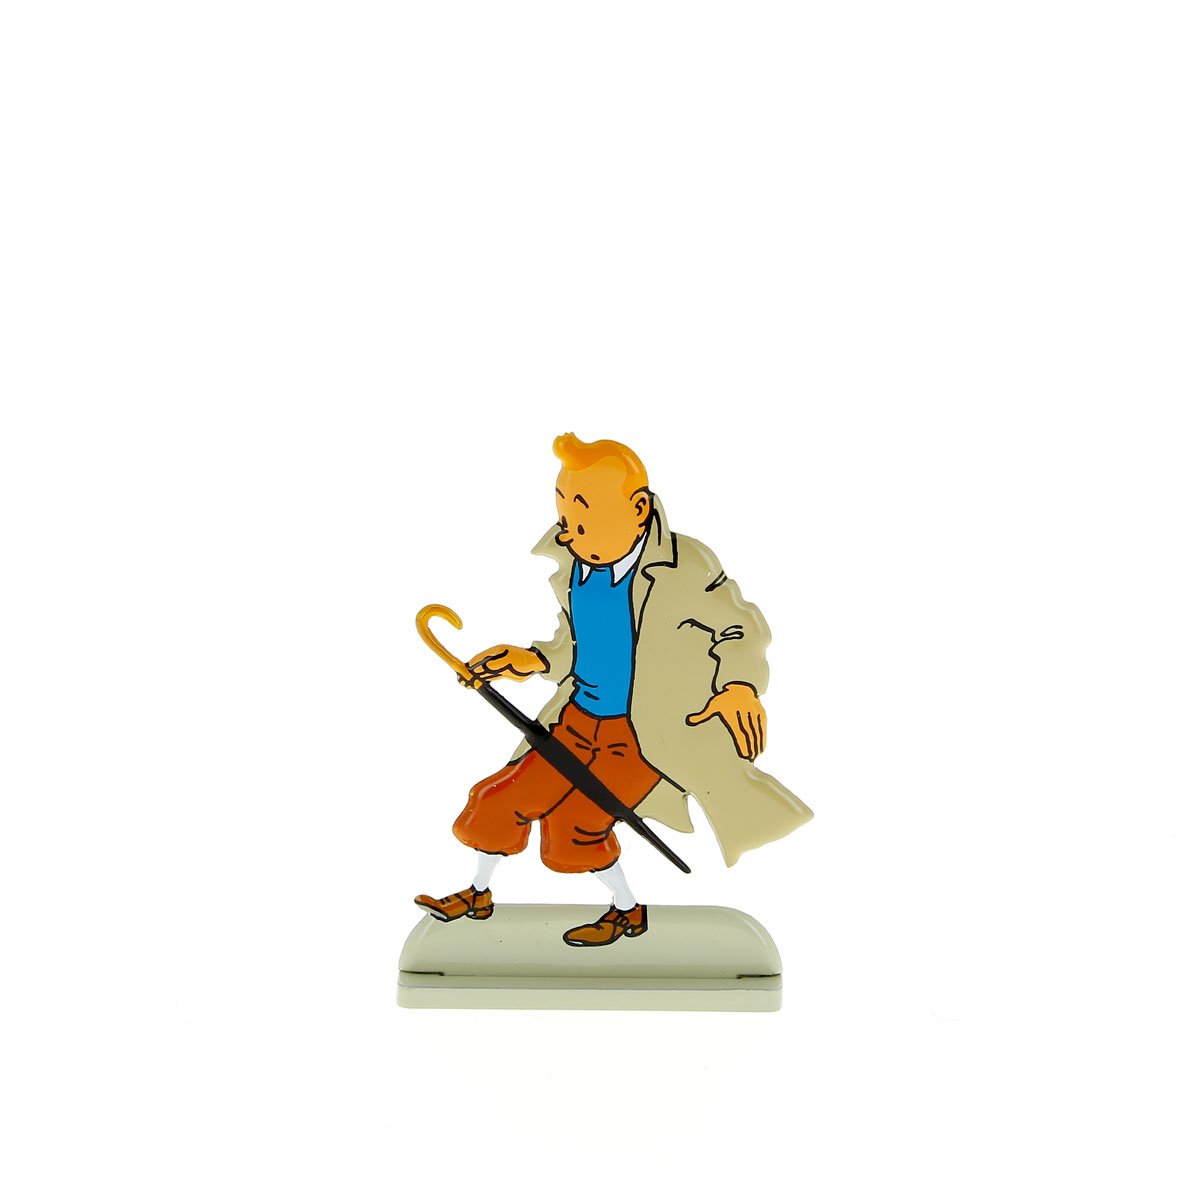 Tintin fait tomber son parapluie